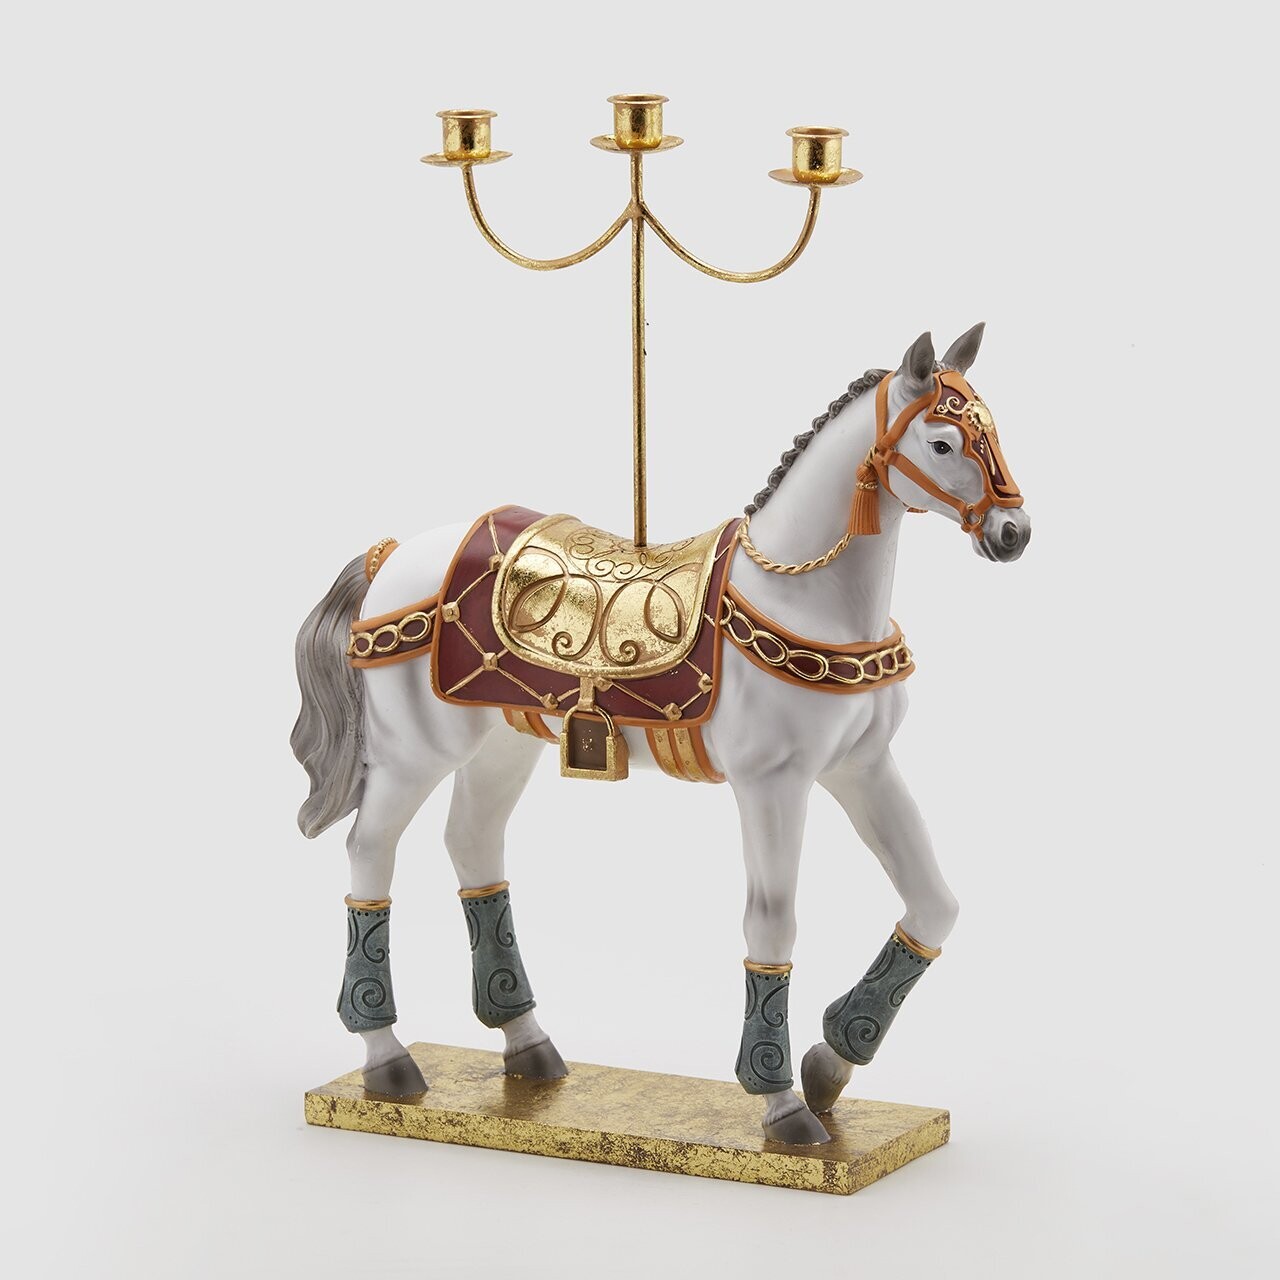 Cavallo in resina con portacandela 3 luci - H.50x40 cm - EDG